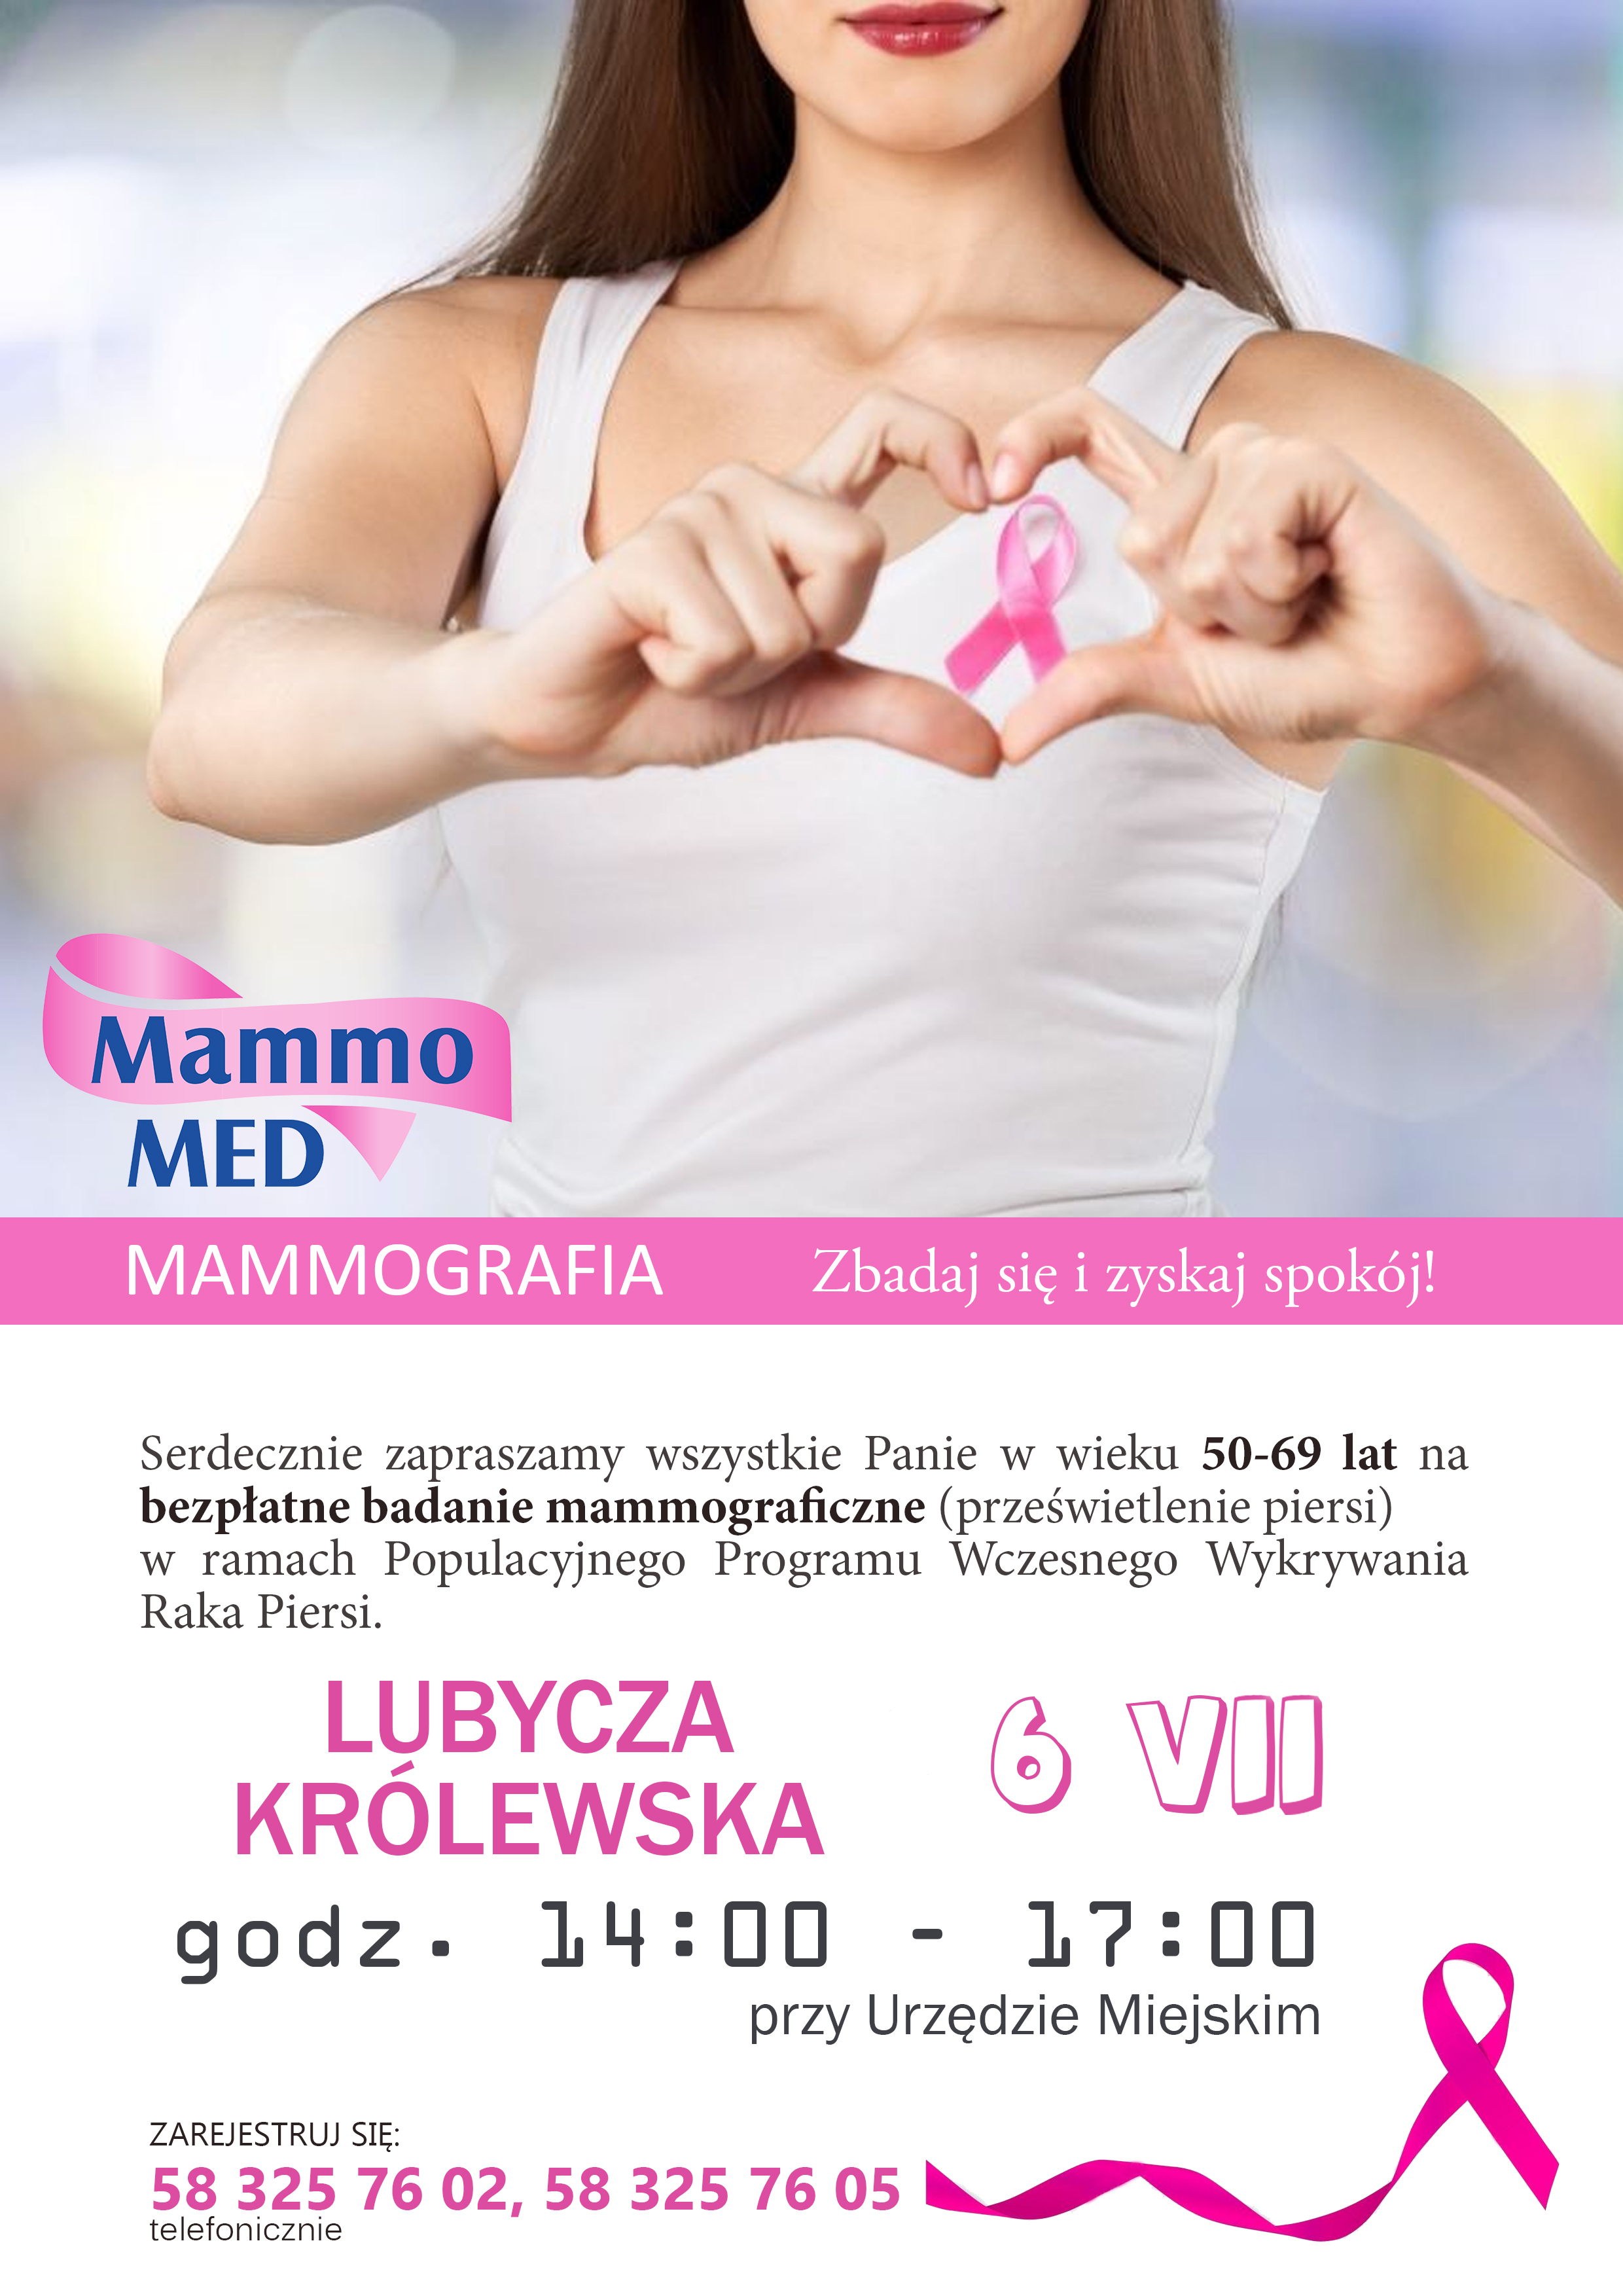 - mammografia.jpg